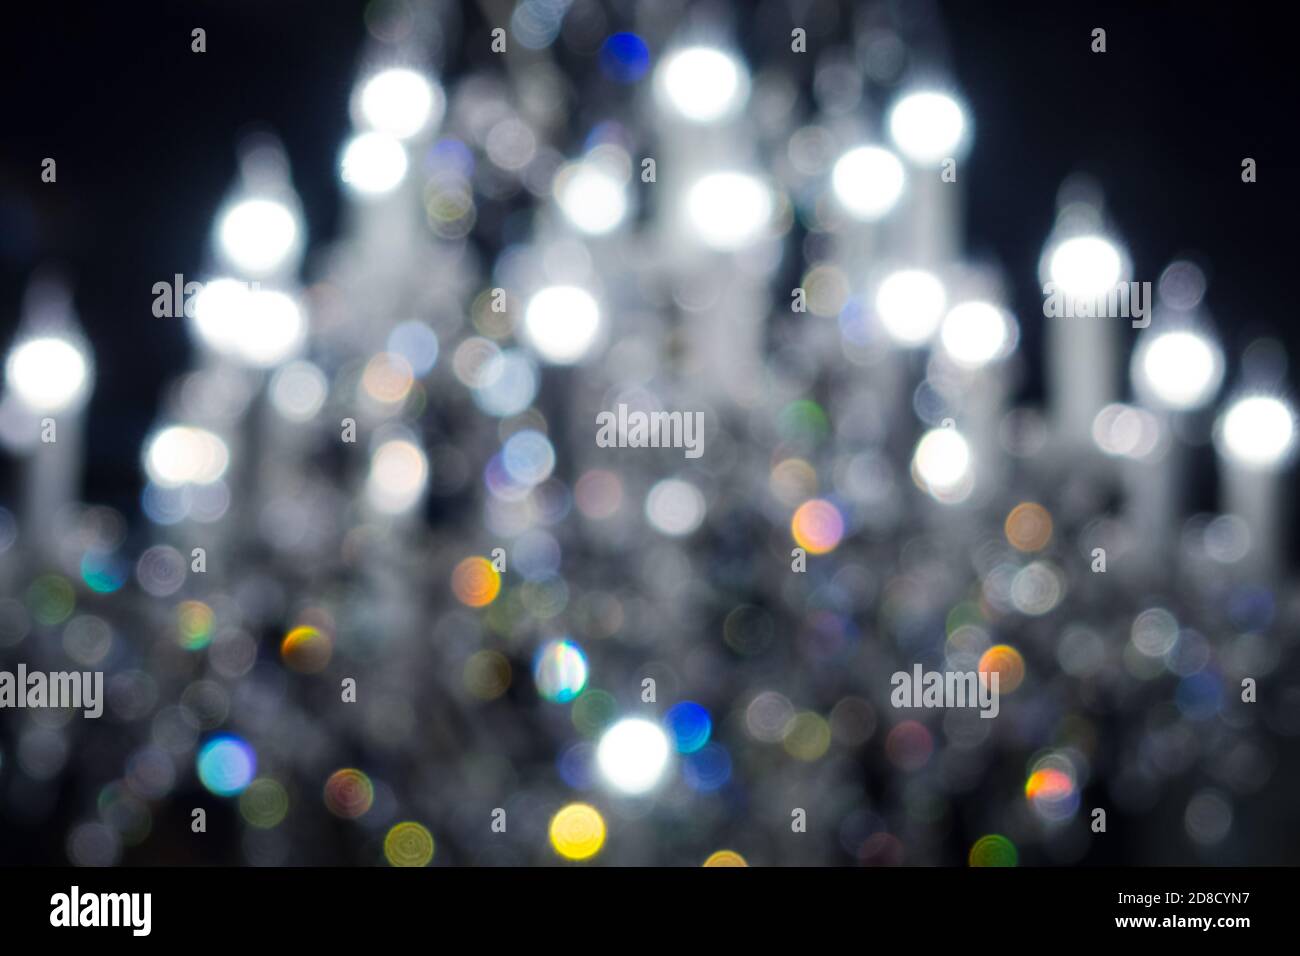 defocused lights of chandelier, blurred light fixture background Stock Photo